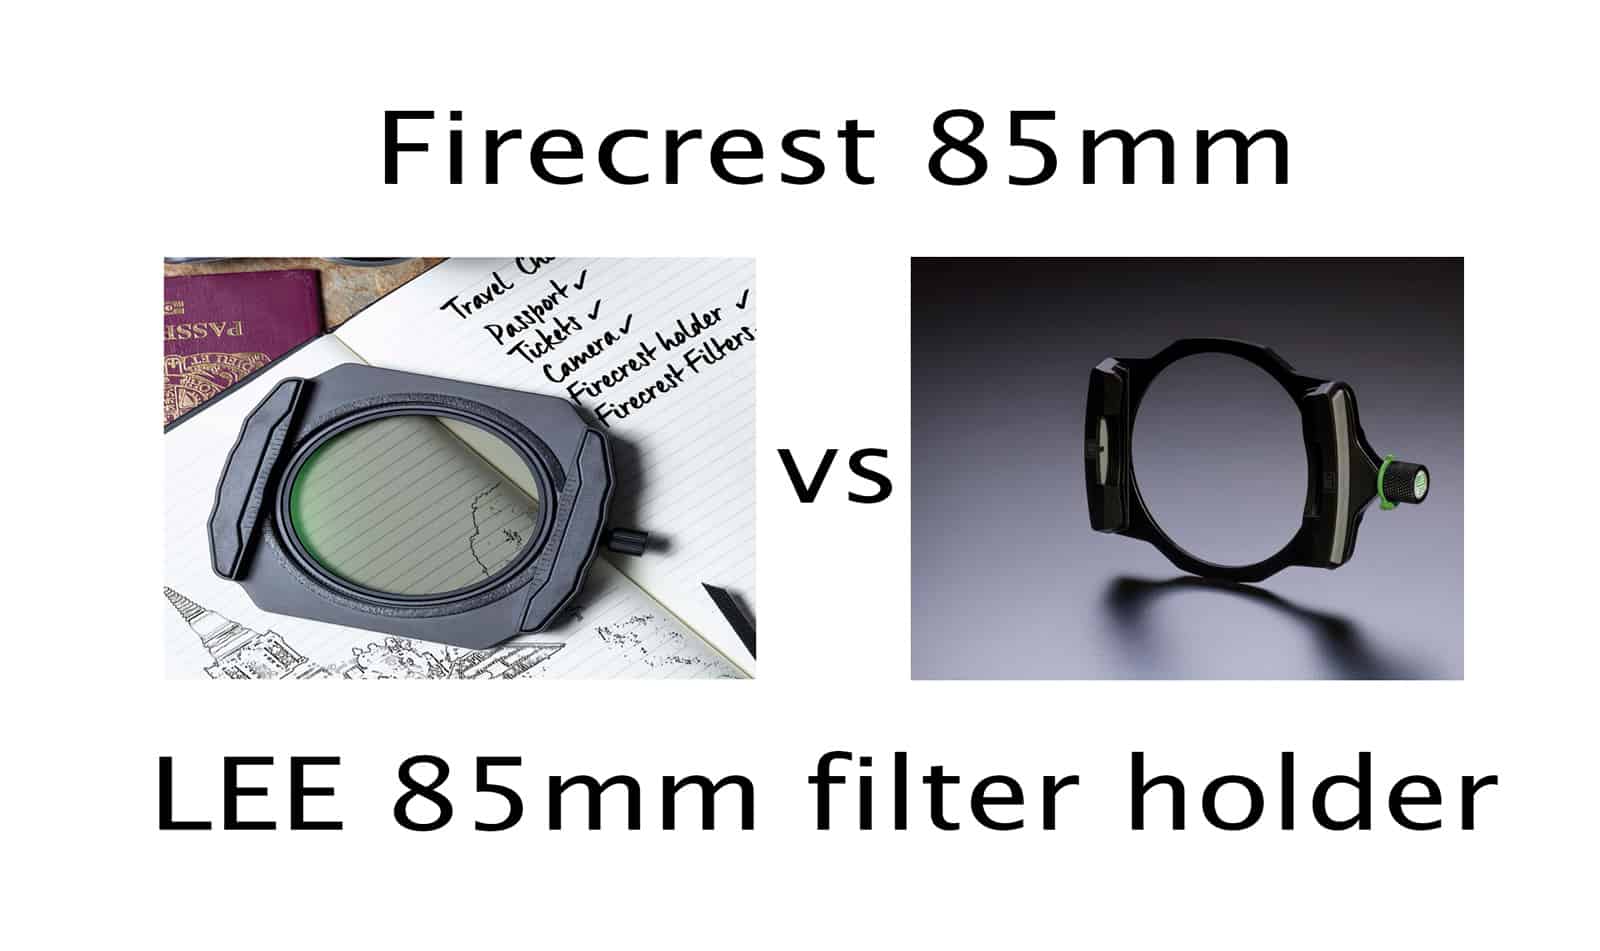 LEE 85mm filter holder vs Formatt Hitech 85mm Filter Holder Review